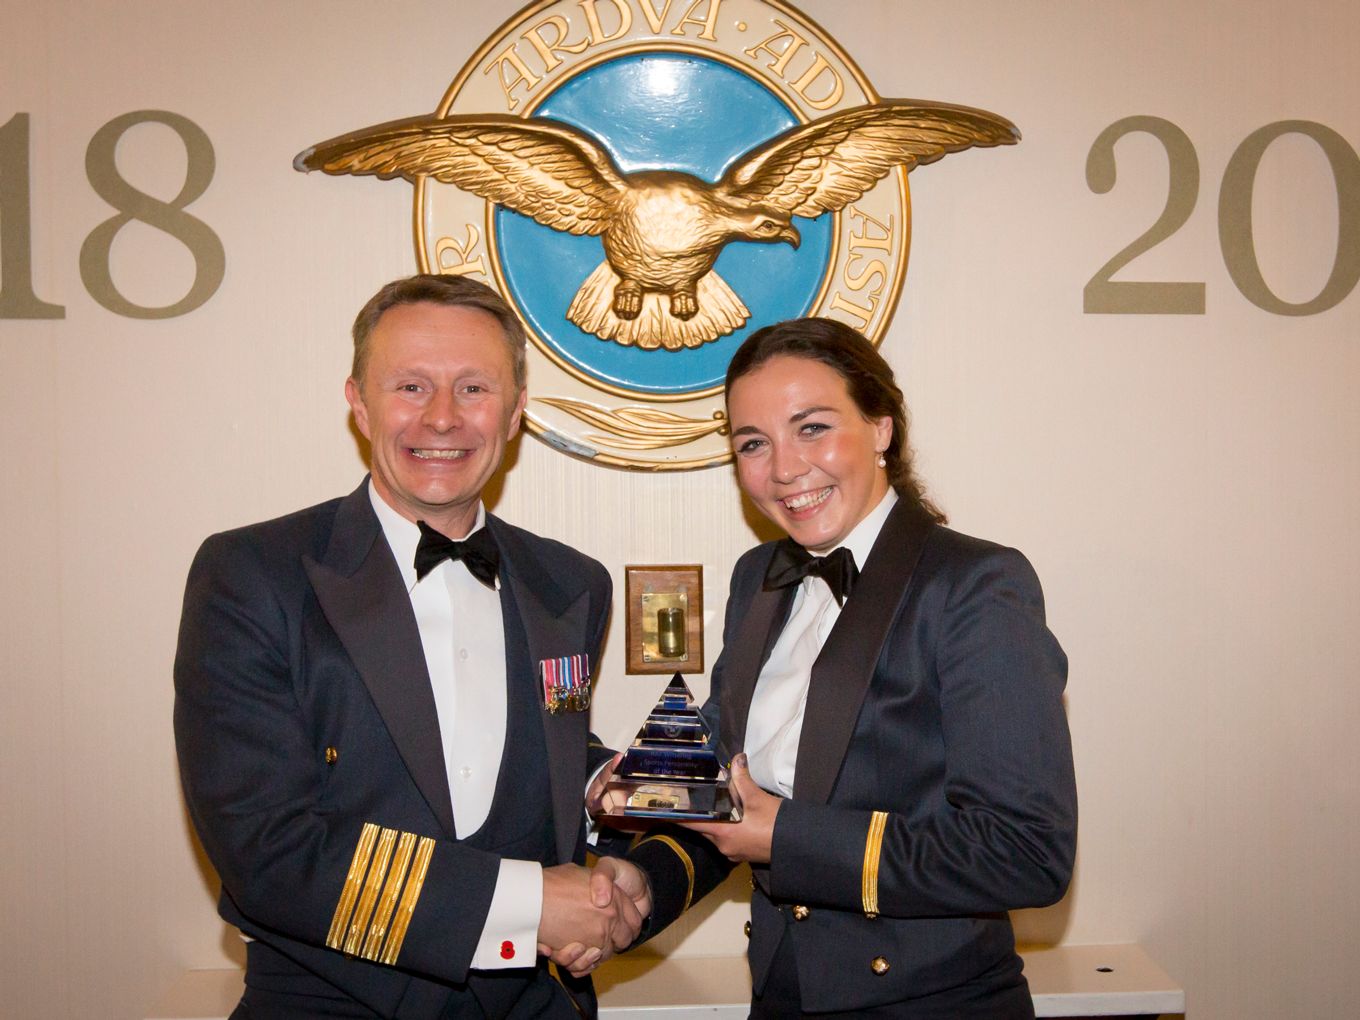 Gp Capt Tony Keeling presents the SPOTY award to Fg Off Rachel Clarke